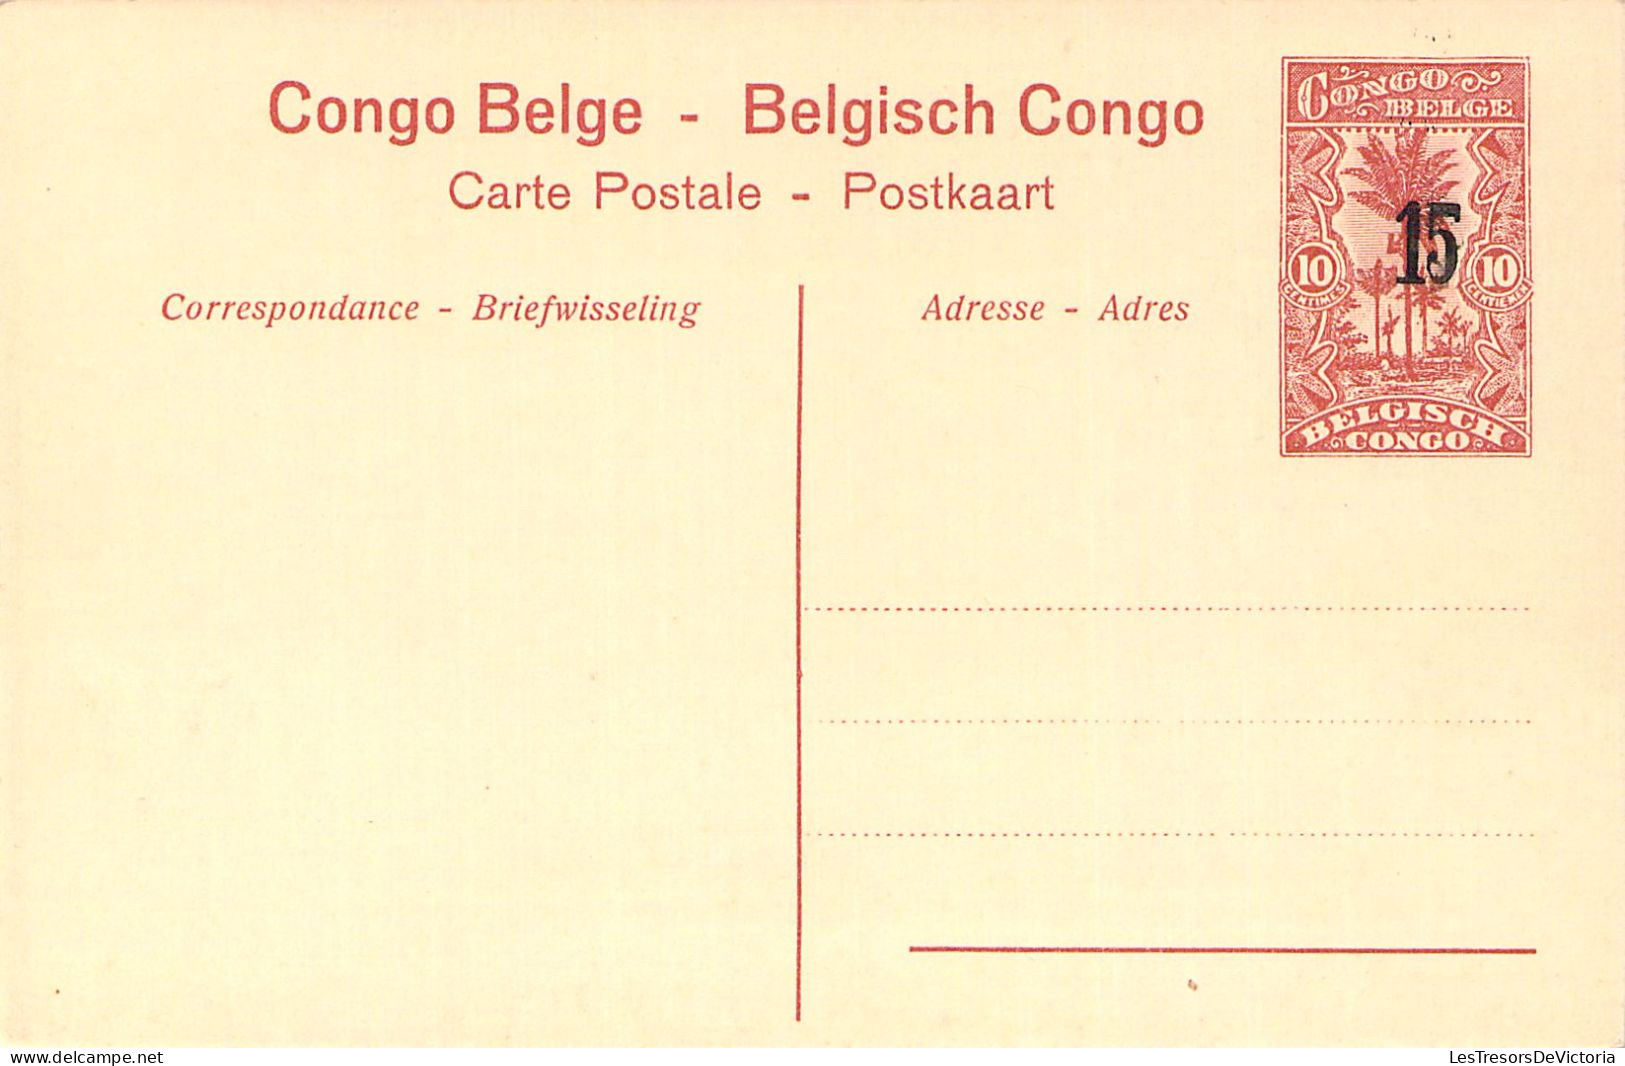 CONGO BELGE - Emballage De Poisson Sec Dans Le Mayumbe - Carte Postale Ancienne - Congo Belge